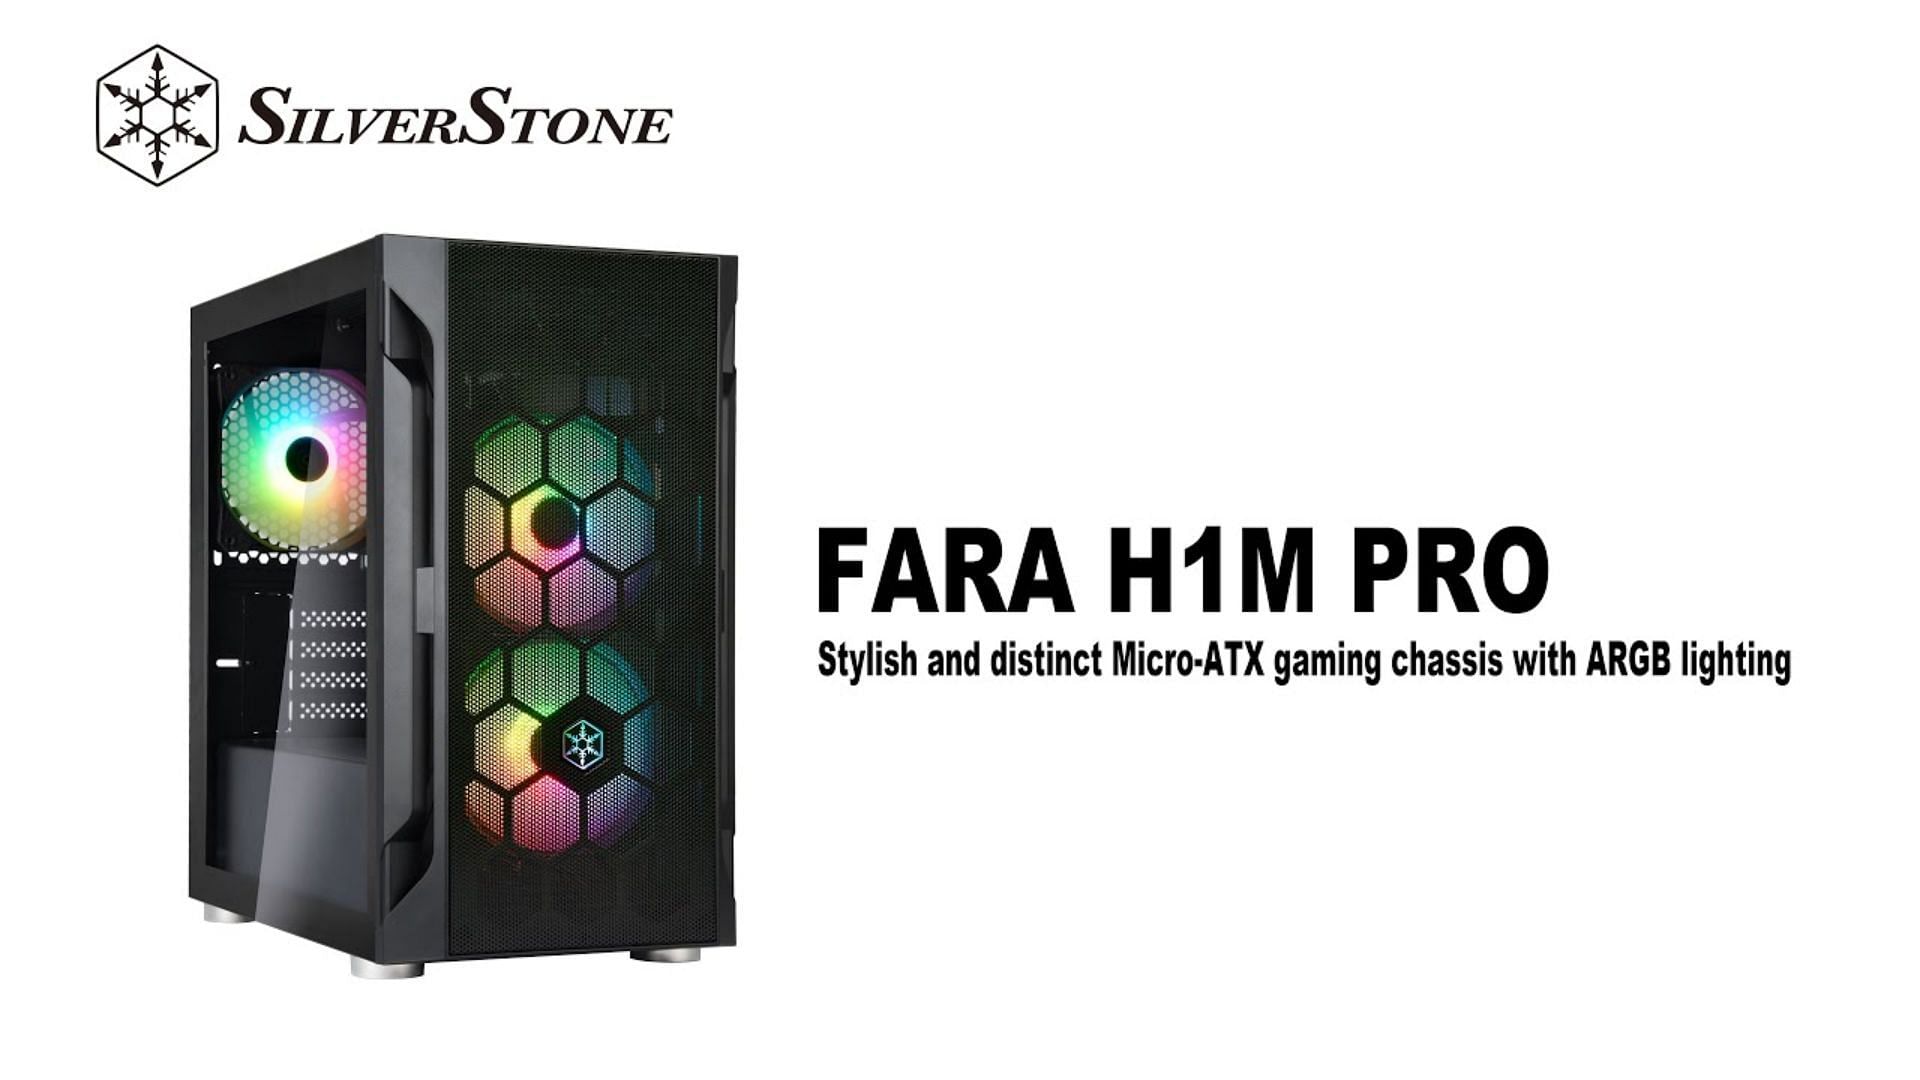 The SilverStone FARA H1M PRO case (image via SilverStone Technology)